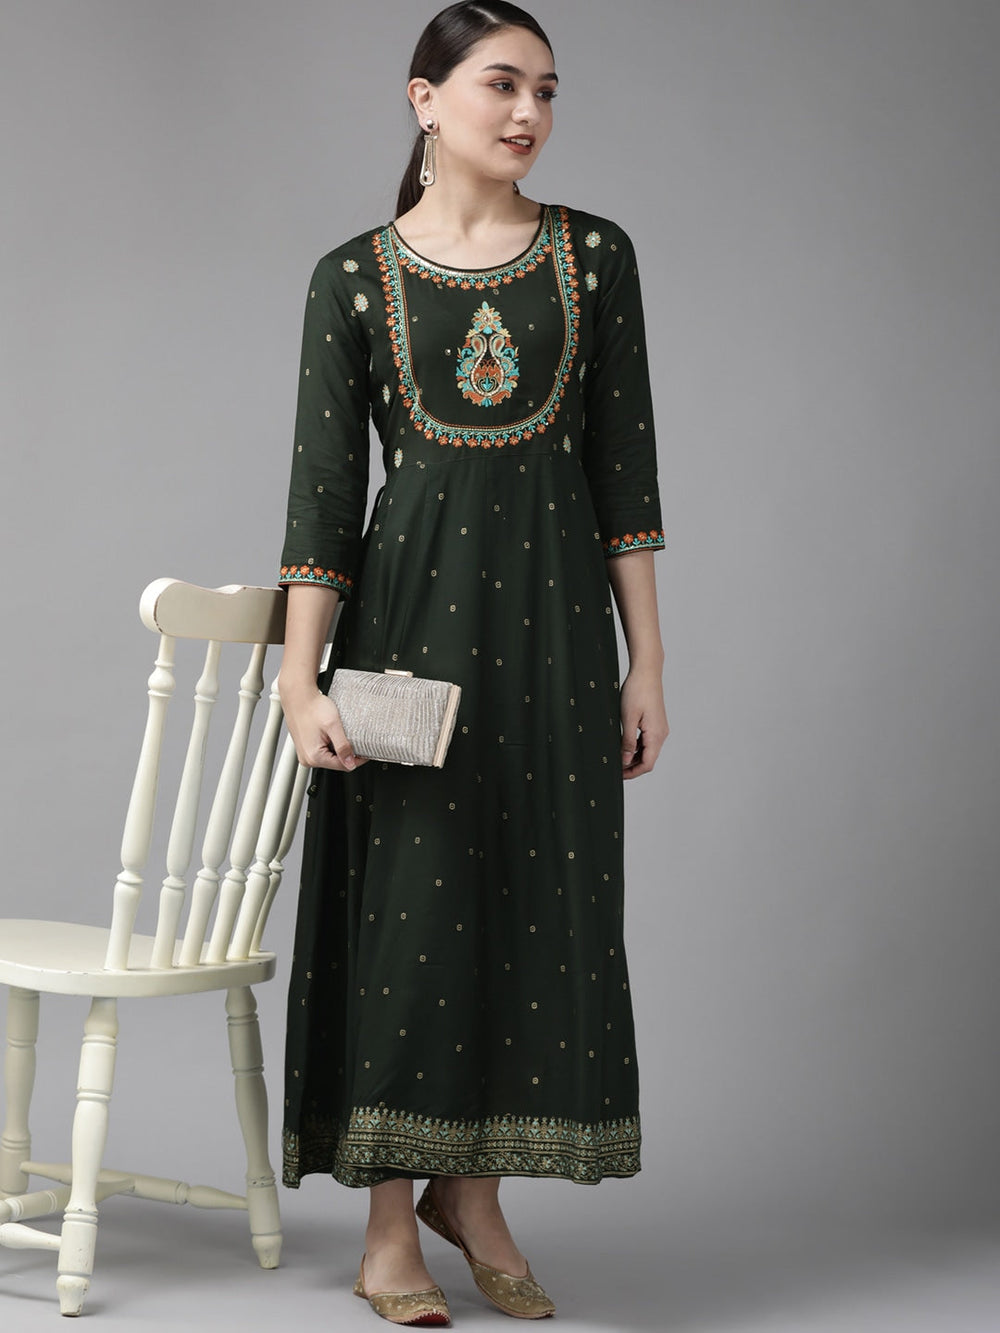 Green & Golden Printed Dress-Yufta Store-4101DRSGRS